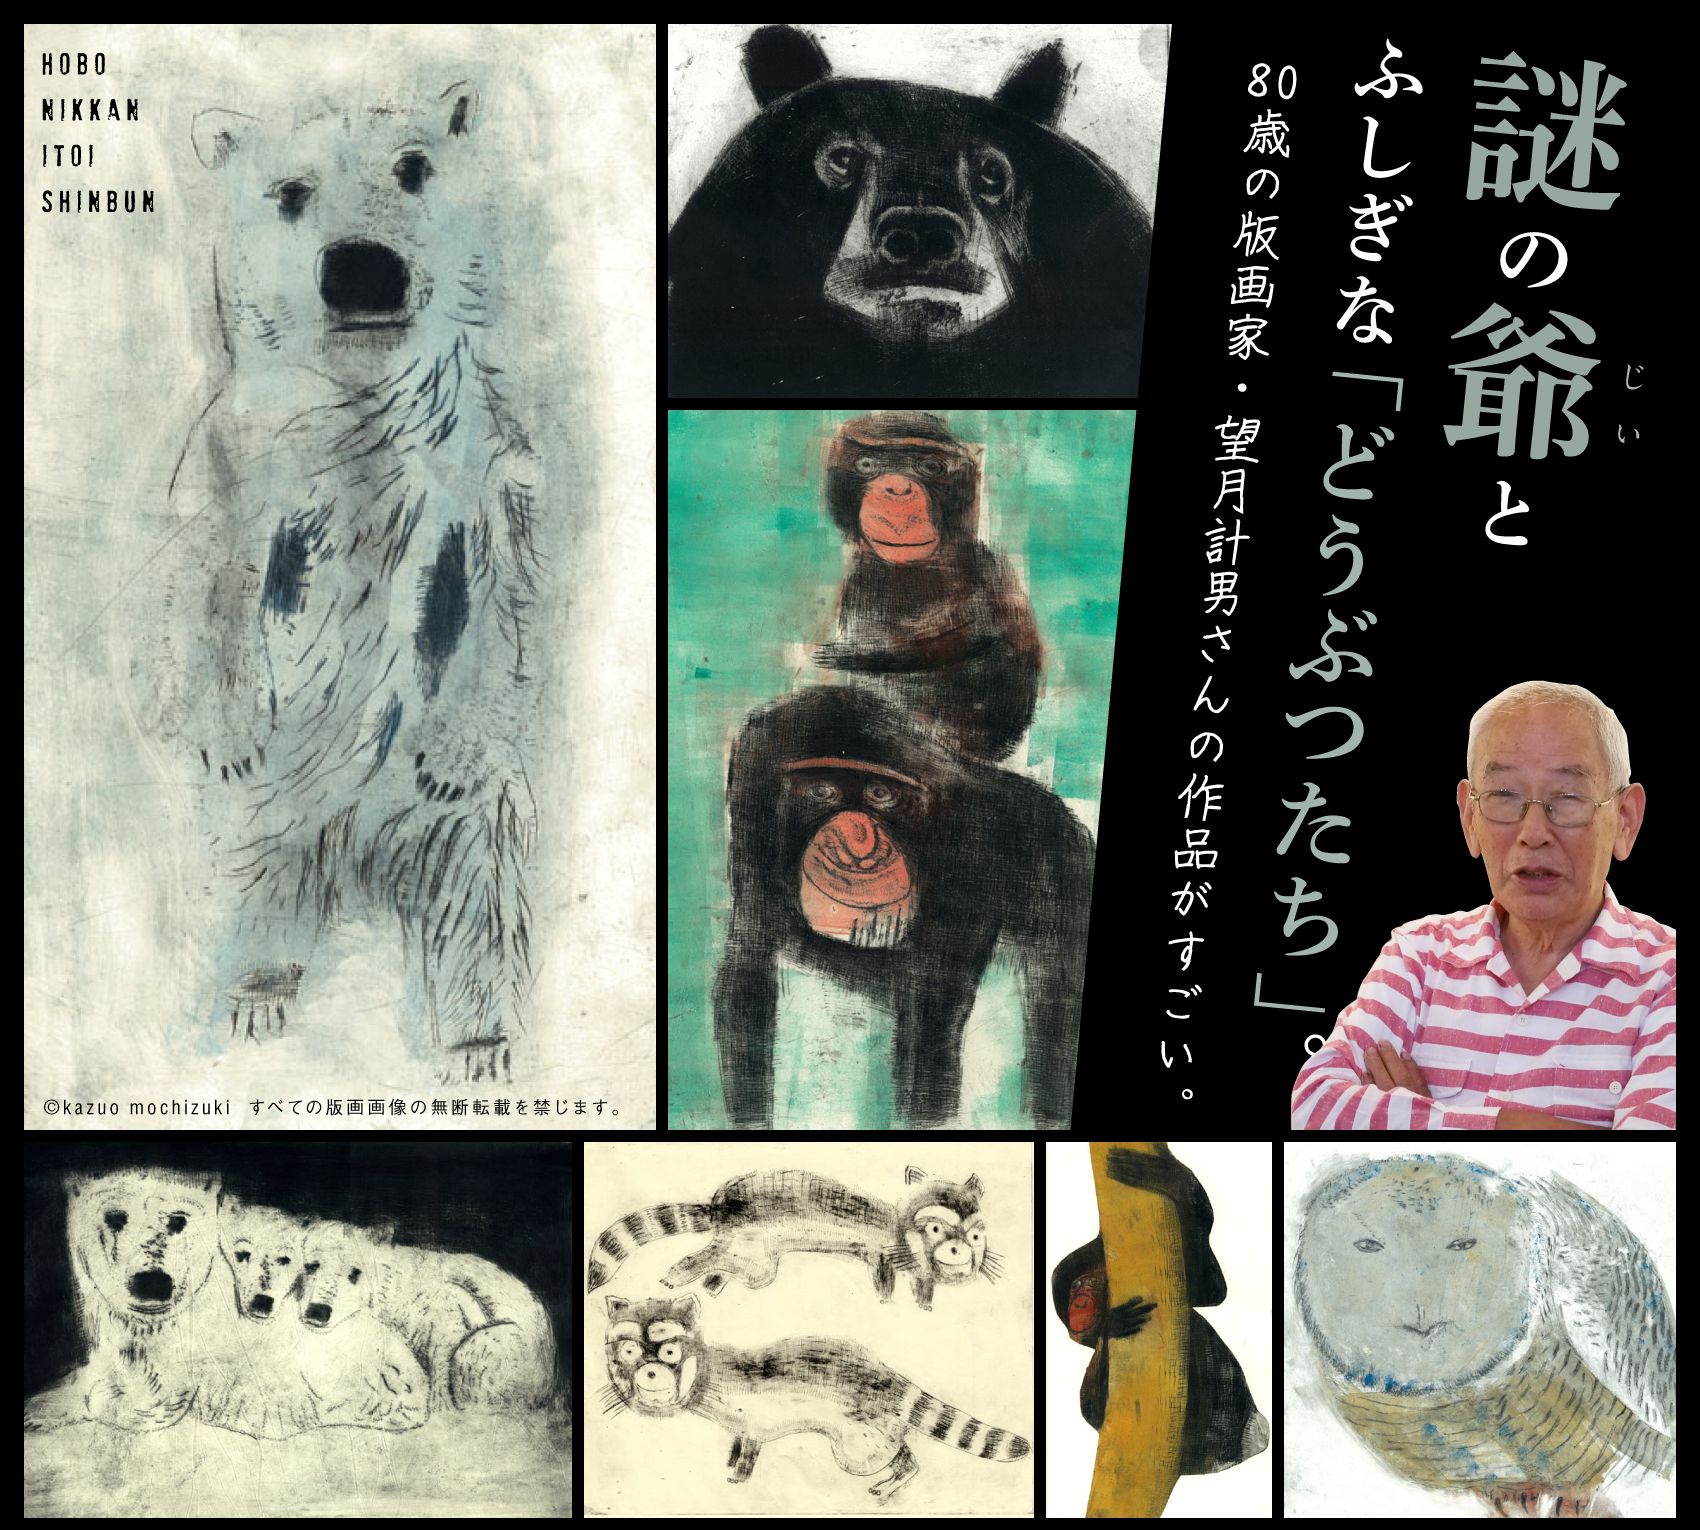 HOBO NIKKAN ITOI SHINBUN 謎の爺 と ふしぎな「どうぶつたち」。80歳の版画家・望月計男さんの作品がすごい。